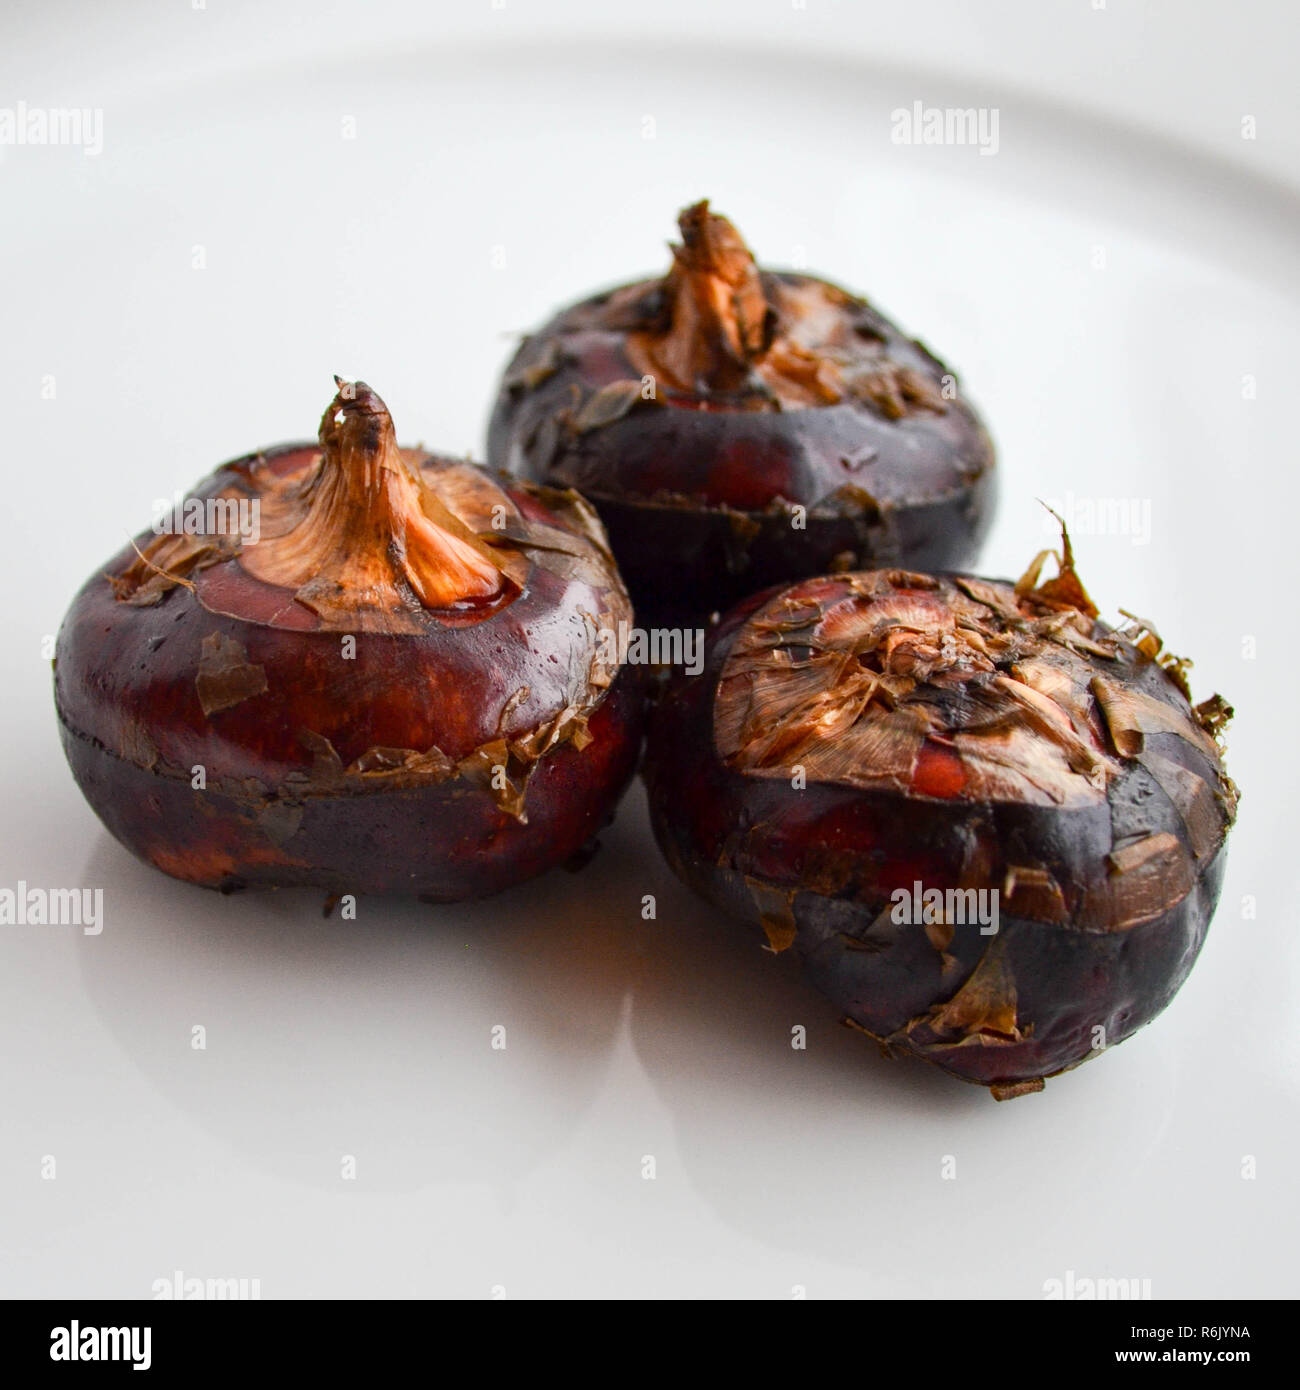 A trio of fresh water chestnuts (Eleocharis dulcis) on a white plate. Stock Photo